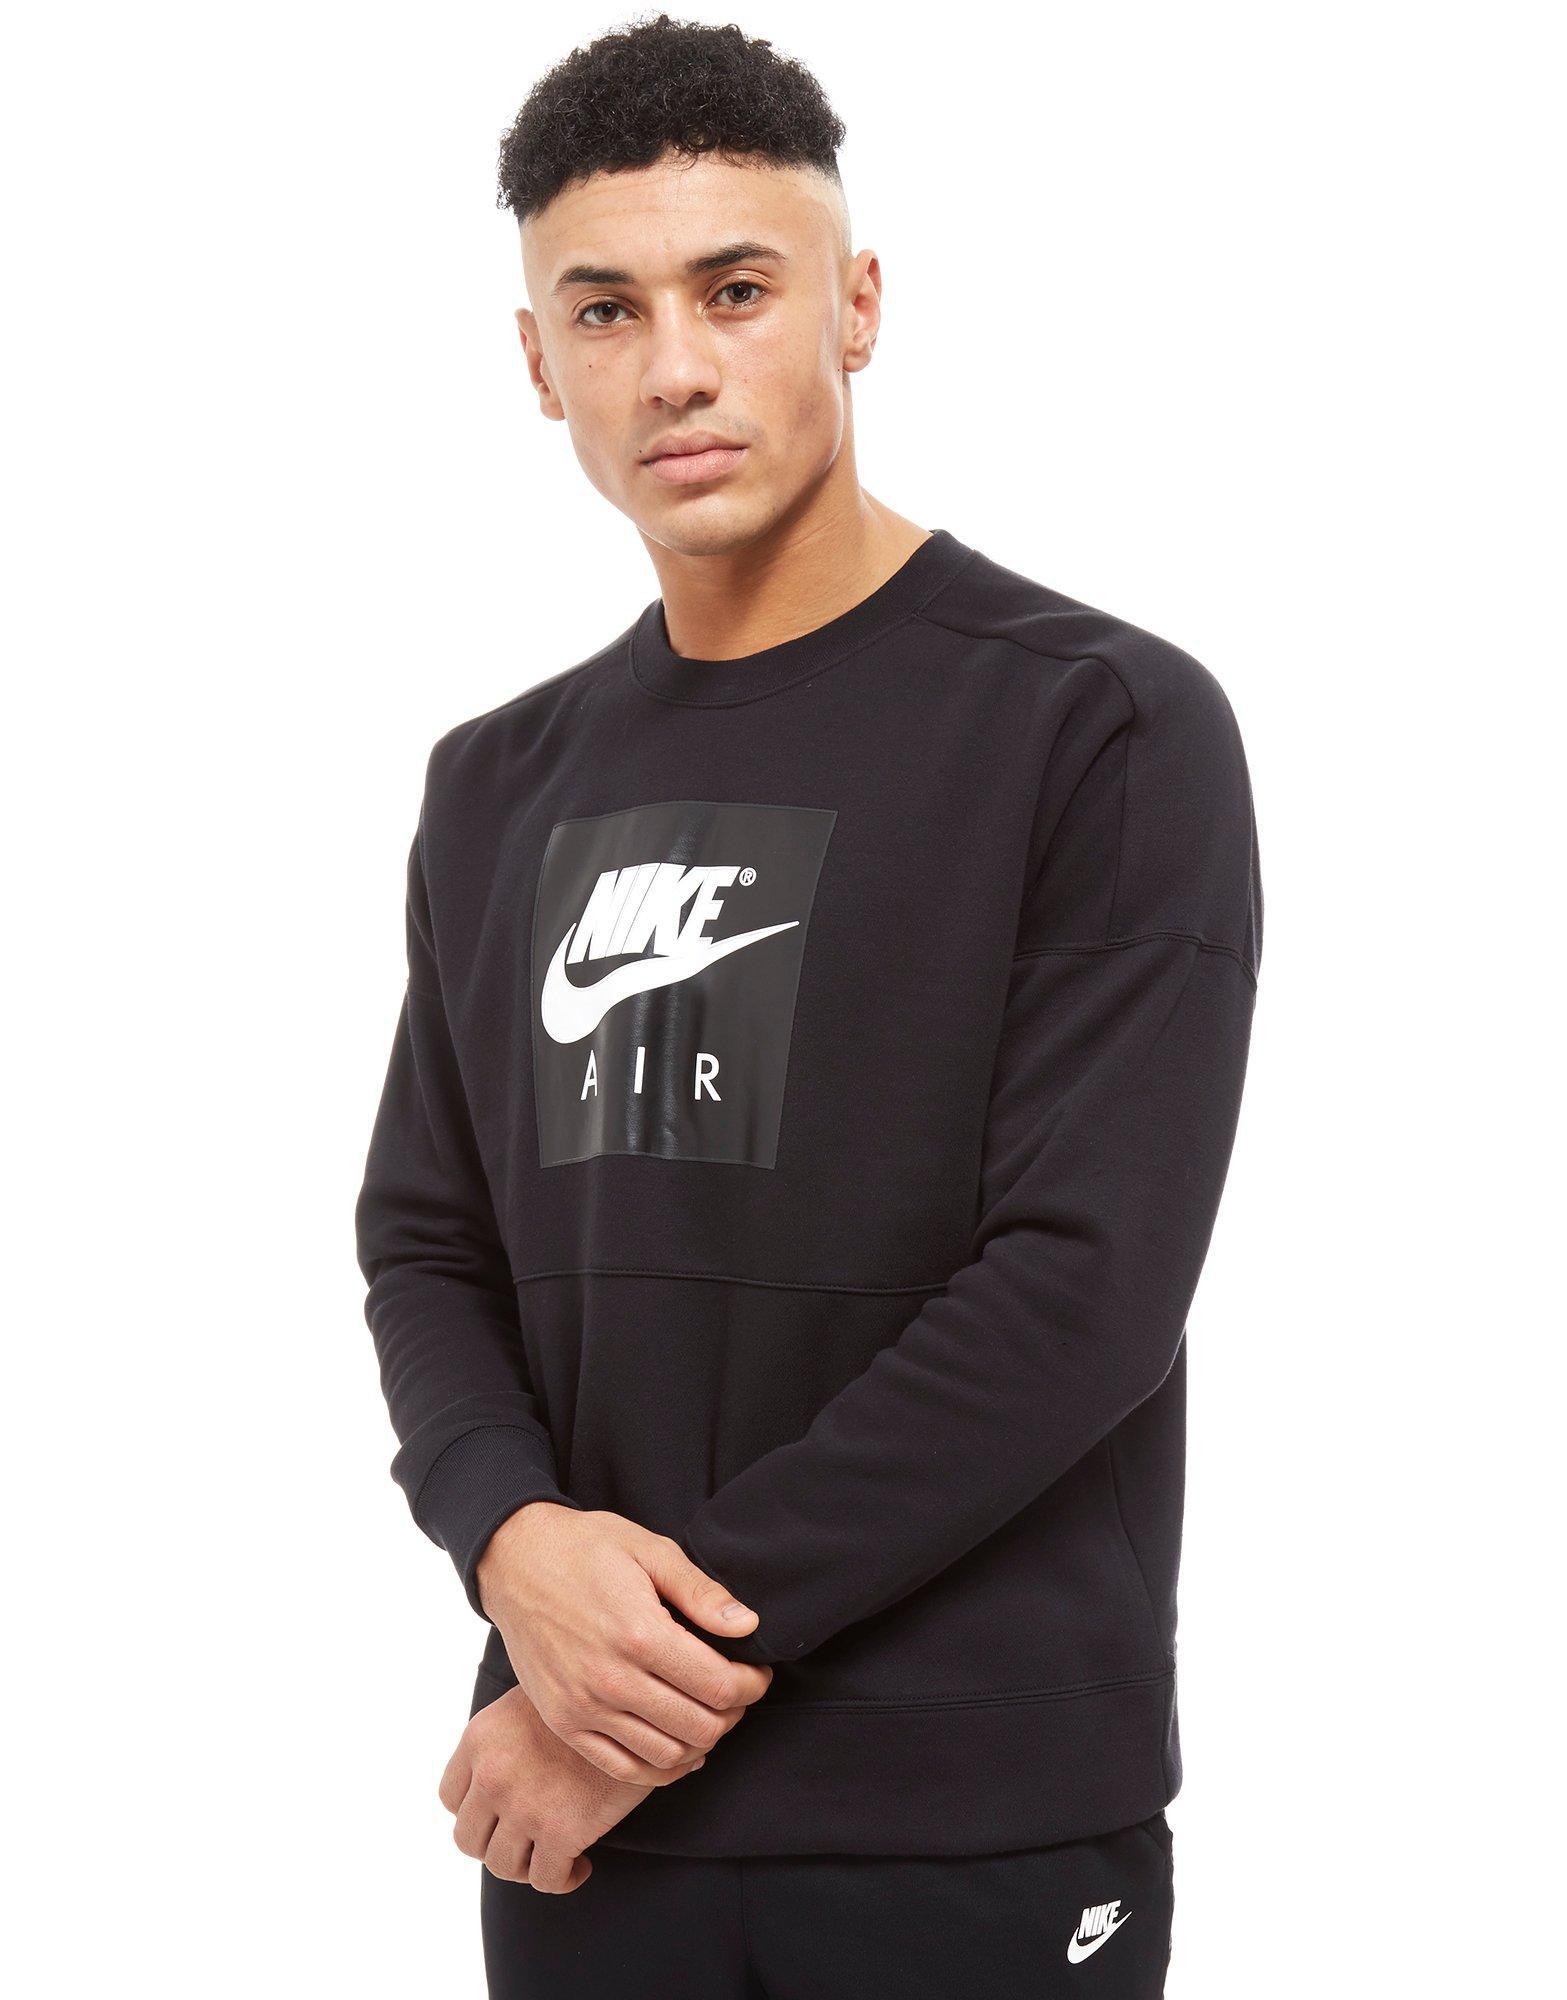 Nike Cotton Air Crew Sweatshirt in 